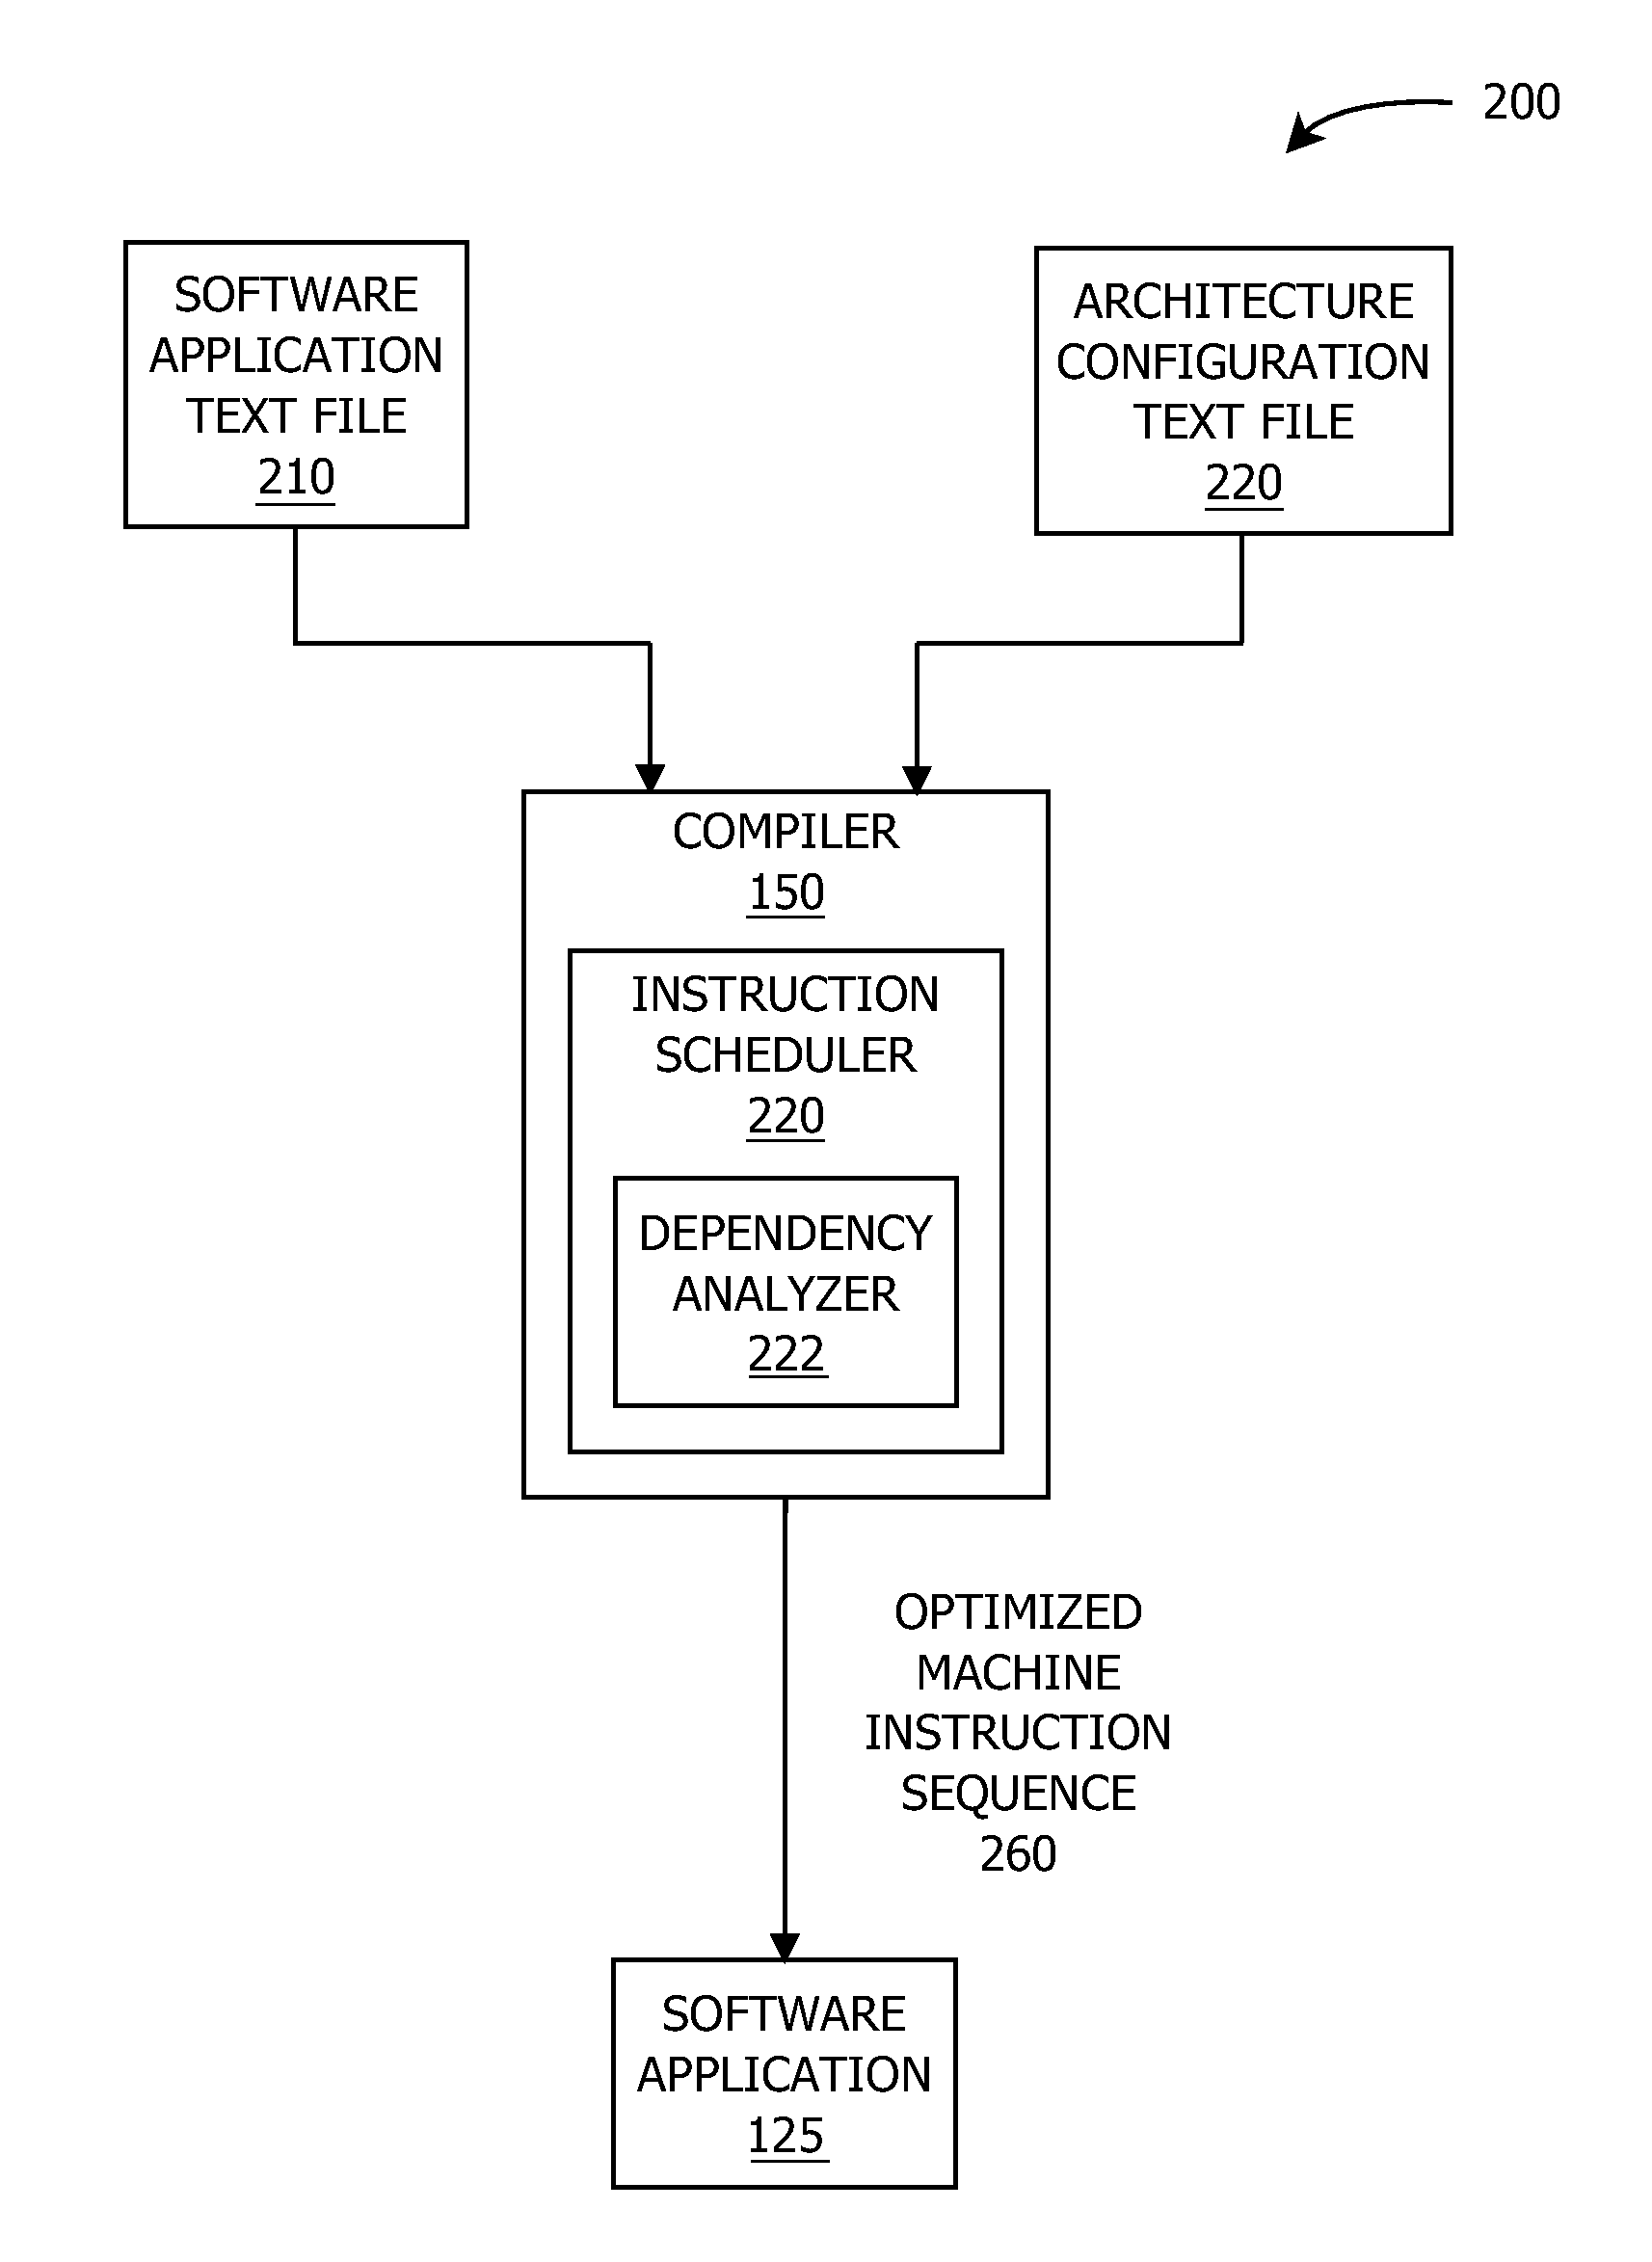 Techniques for determining instruction dependencies